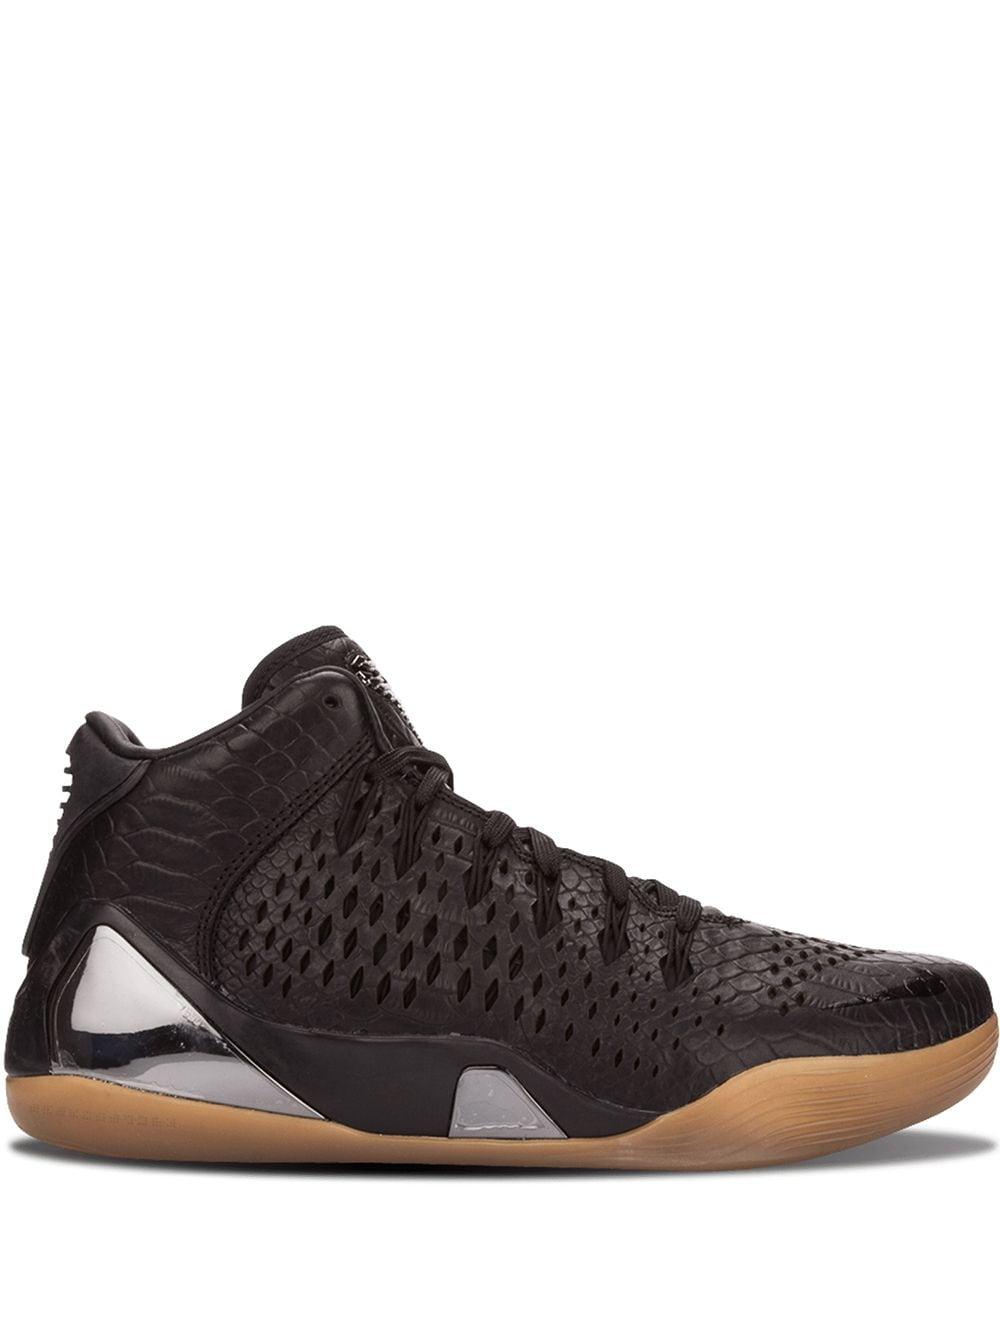 Nike Kobe 9 Mid Ext Qs 'snakeskin' Shoes - Size 11 in Black for Men - Lyst